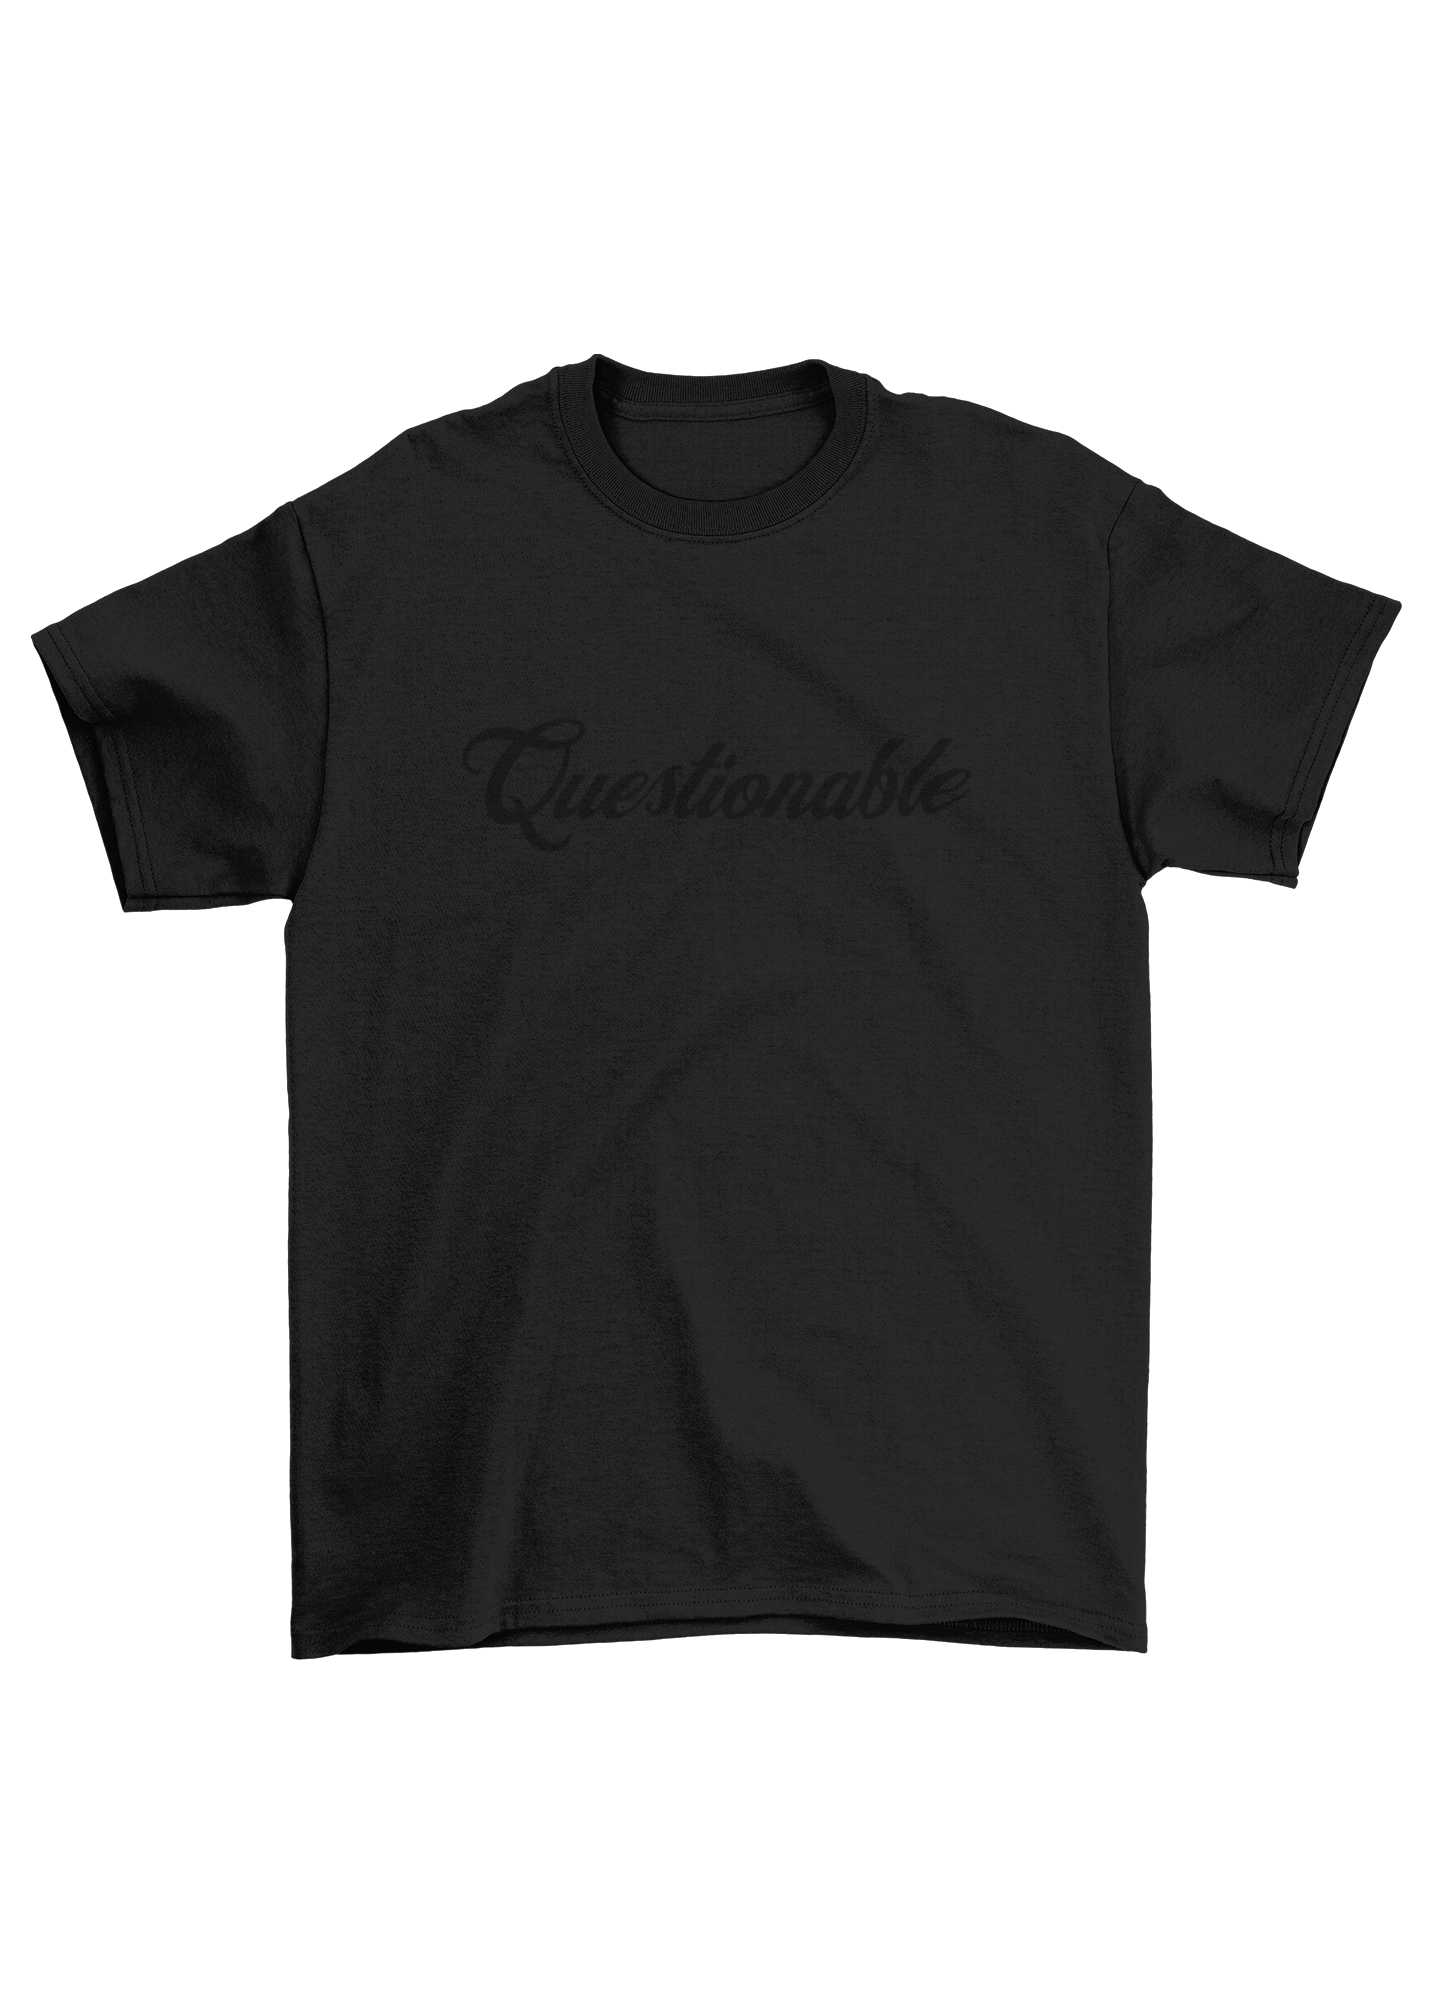 Questionable™ T-Shirt (Blackout & Whiteout)